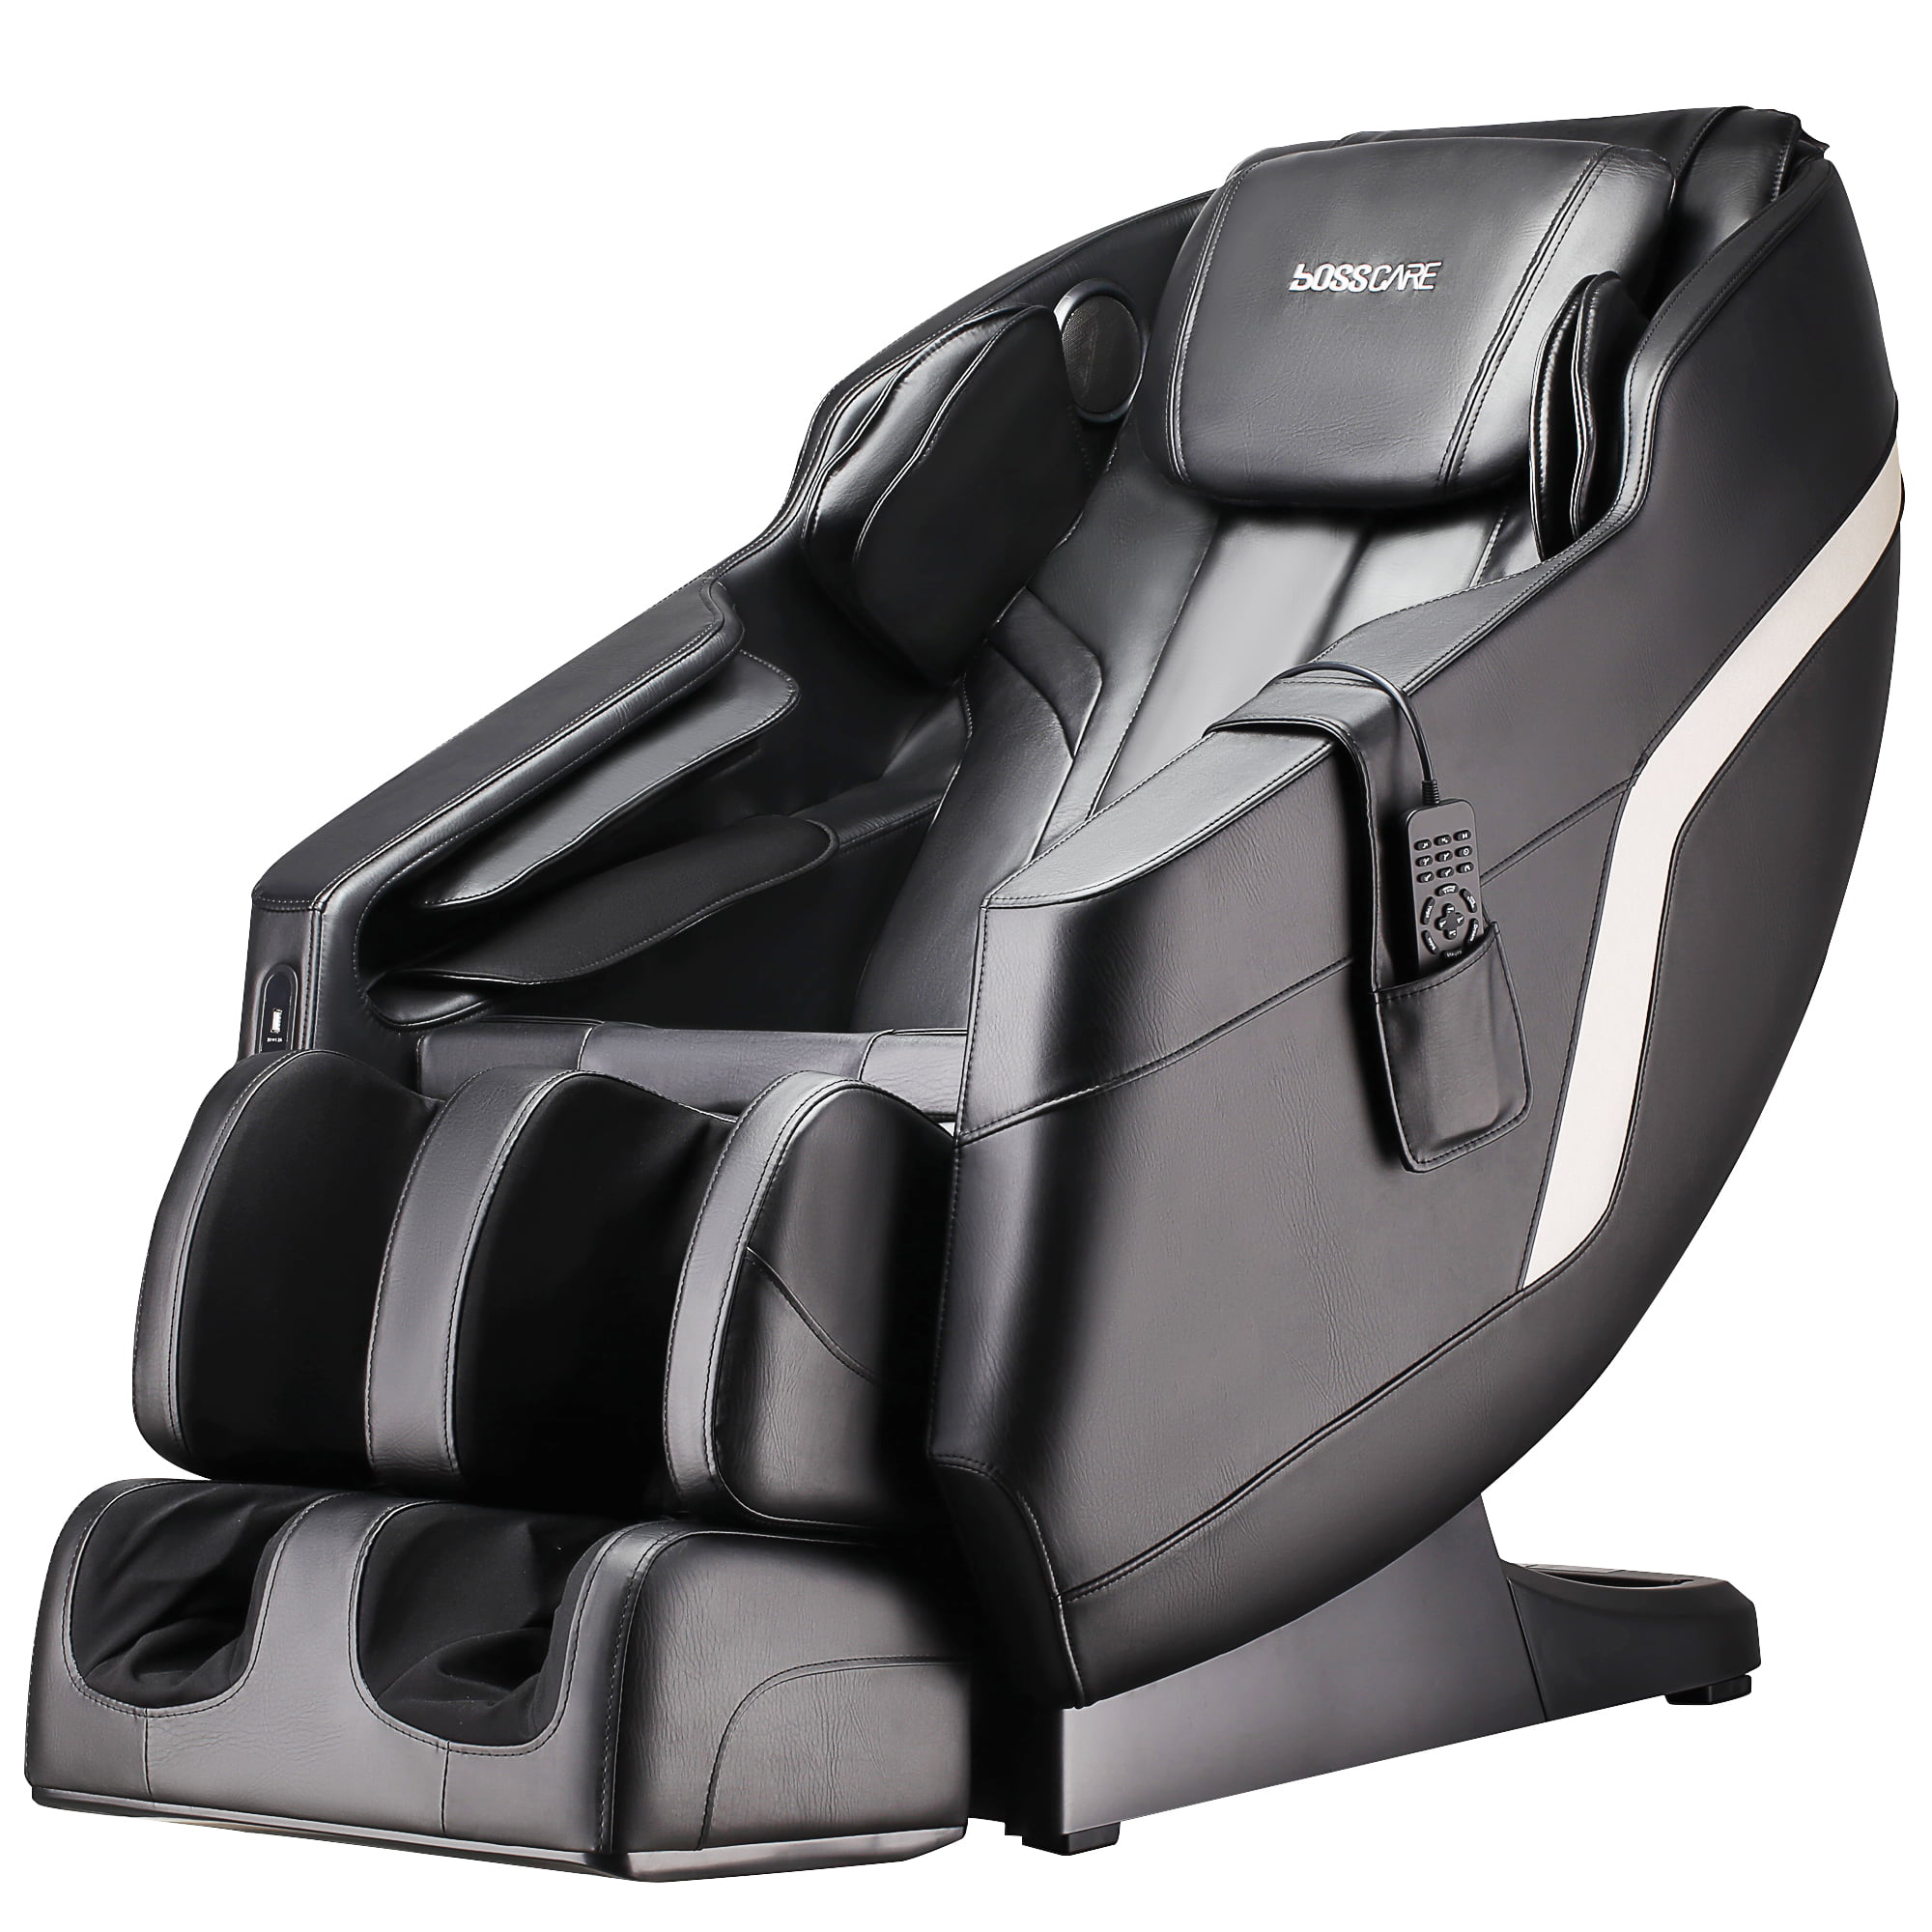 Assembled Full Body Zero Gravity Reclining Massage Chair (Black)- $786 + FS